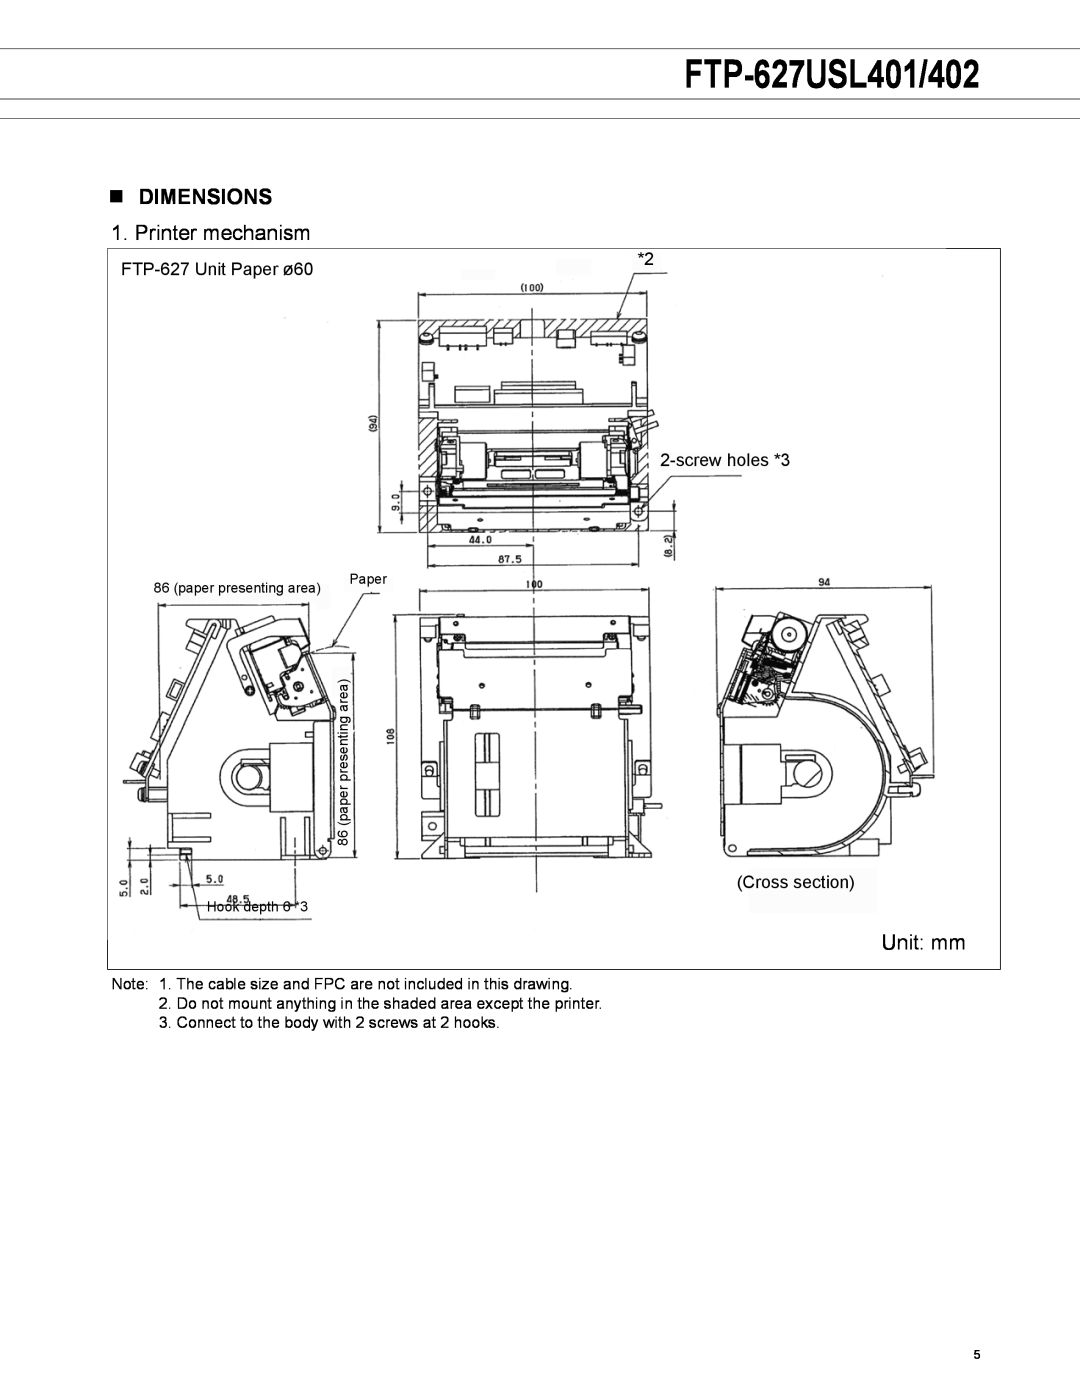 Fujitsu FTP-627USL402 manual n dimensions, FTP-627USL401/402, Printer mechanism, Unit mm, paper presenting area, Paper 